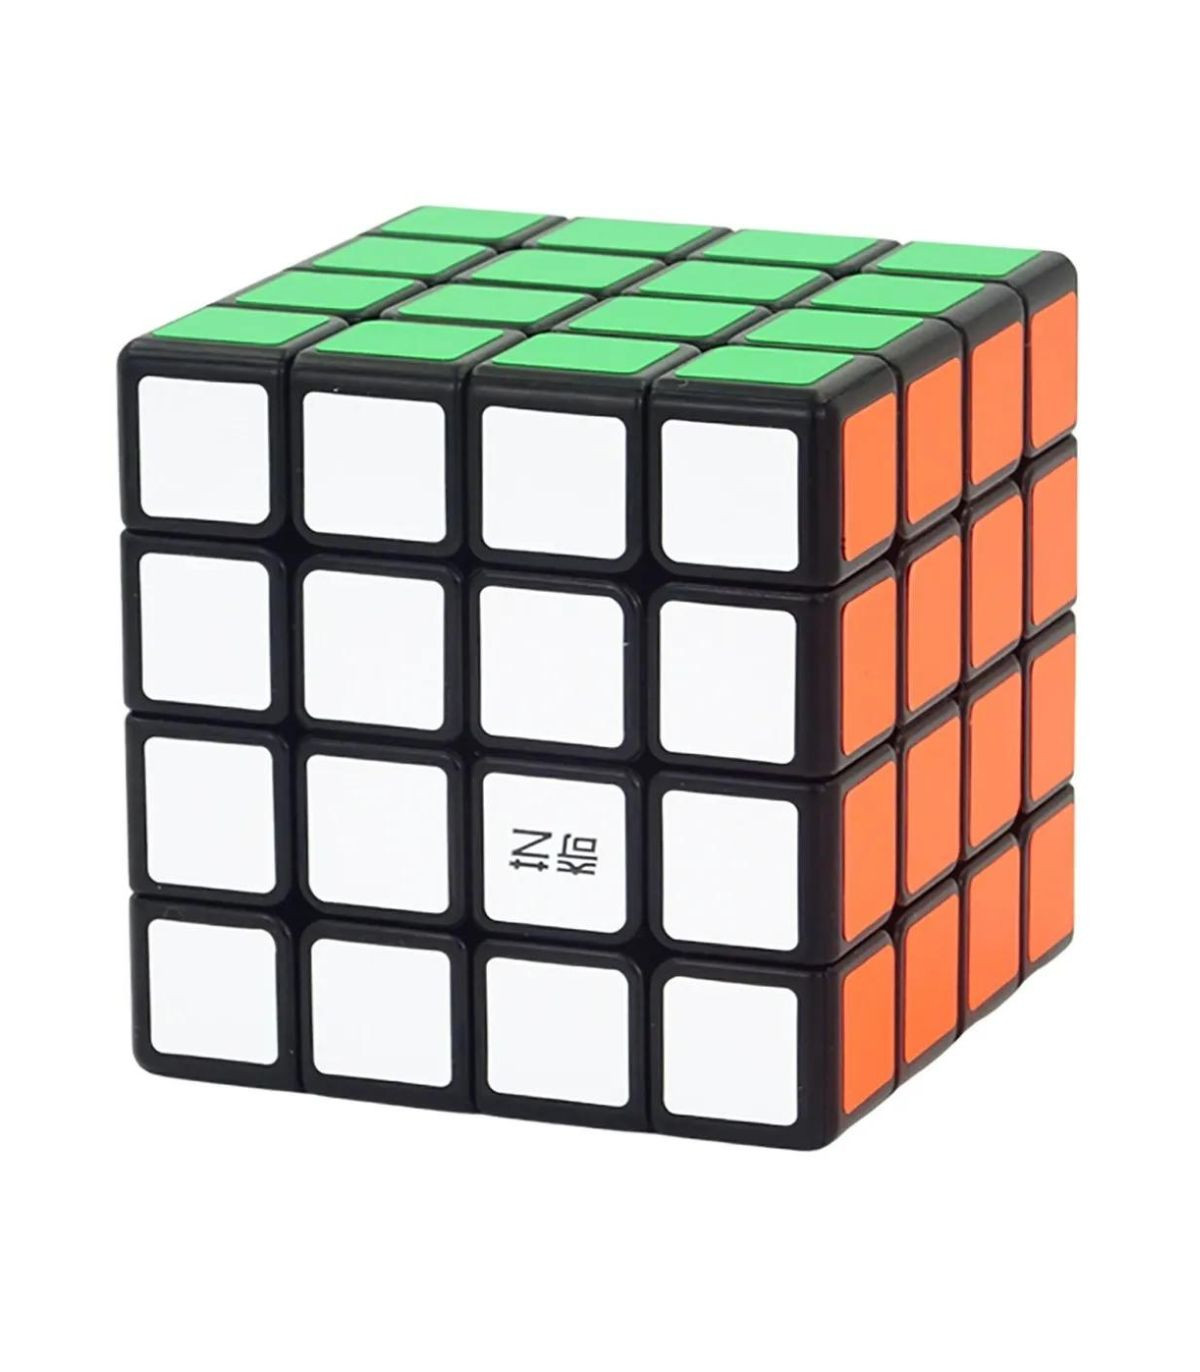 4x4 Cubo De Rubik RUBIK QIYI QIYUAN 4X4 W2 QYTOYS